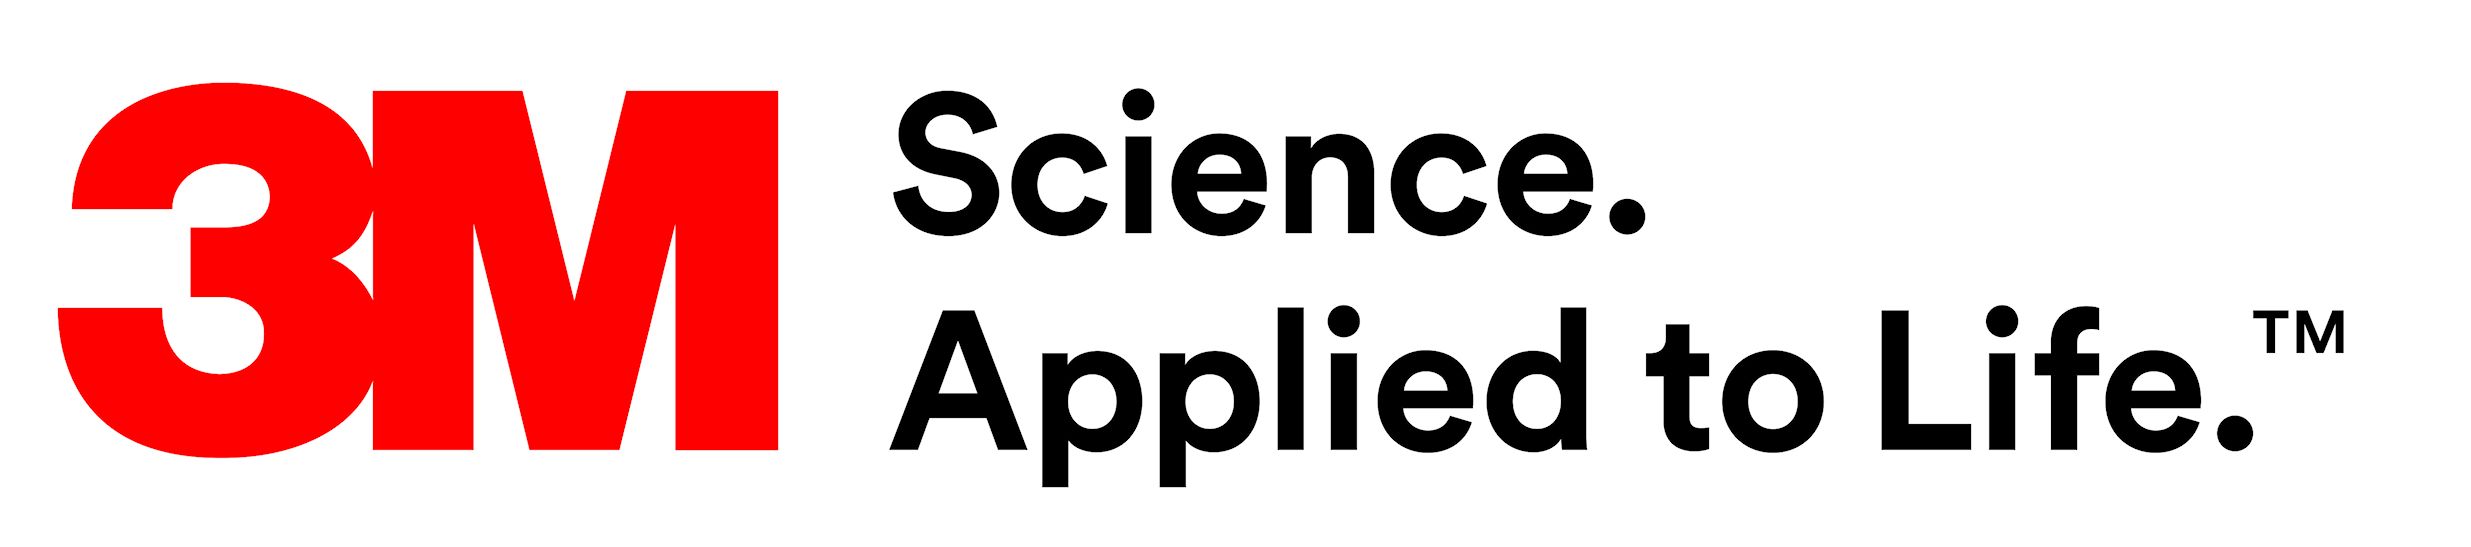 3M_Logo_science_small